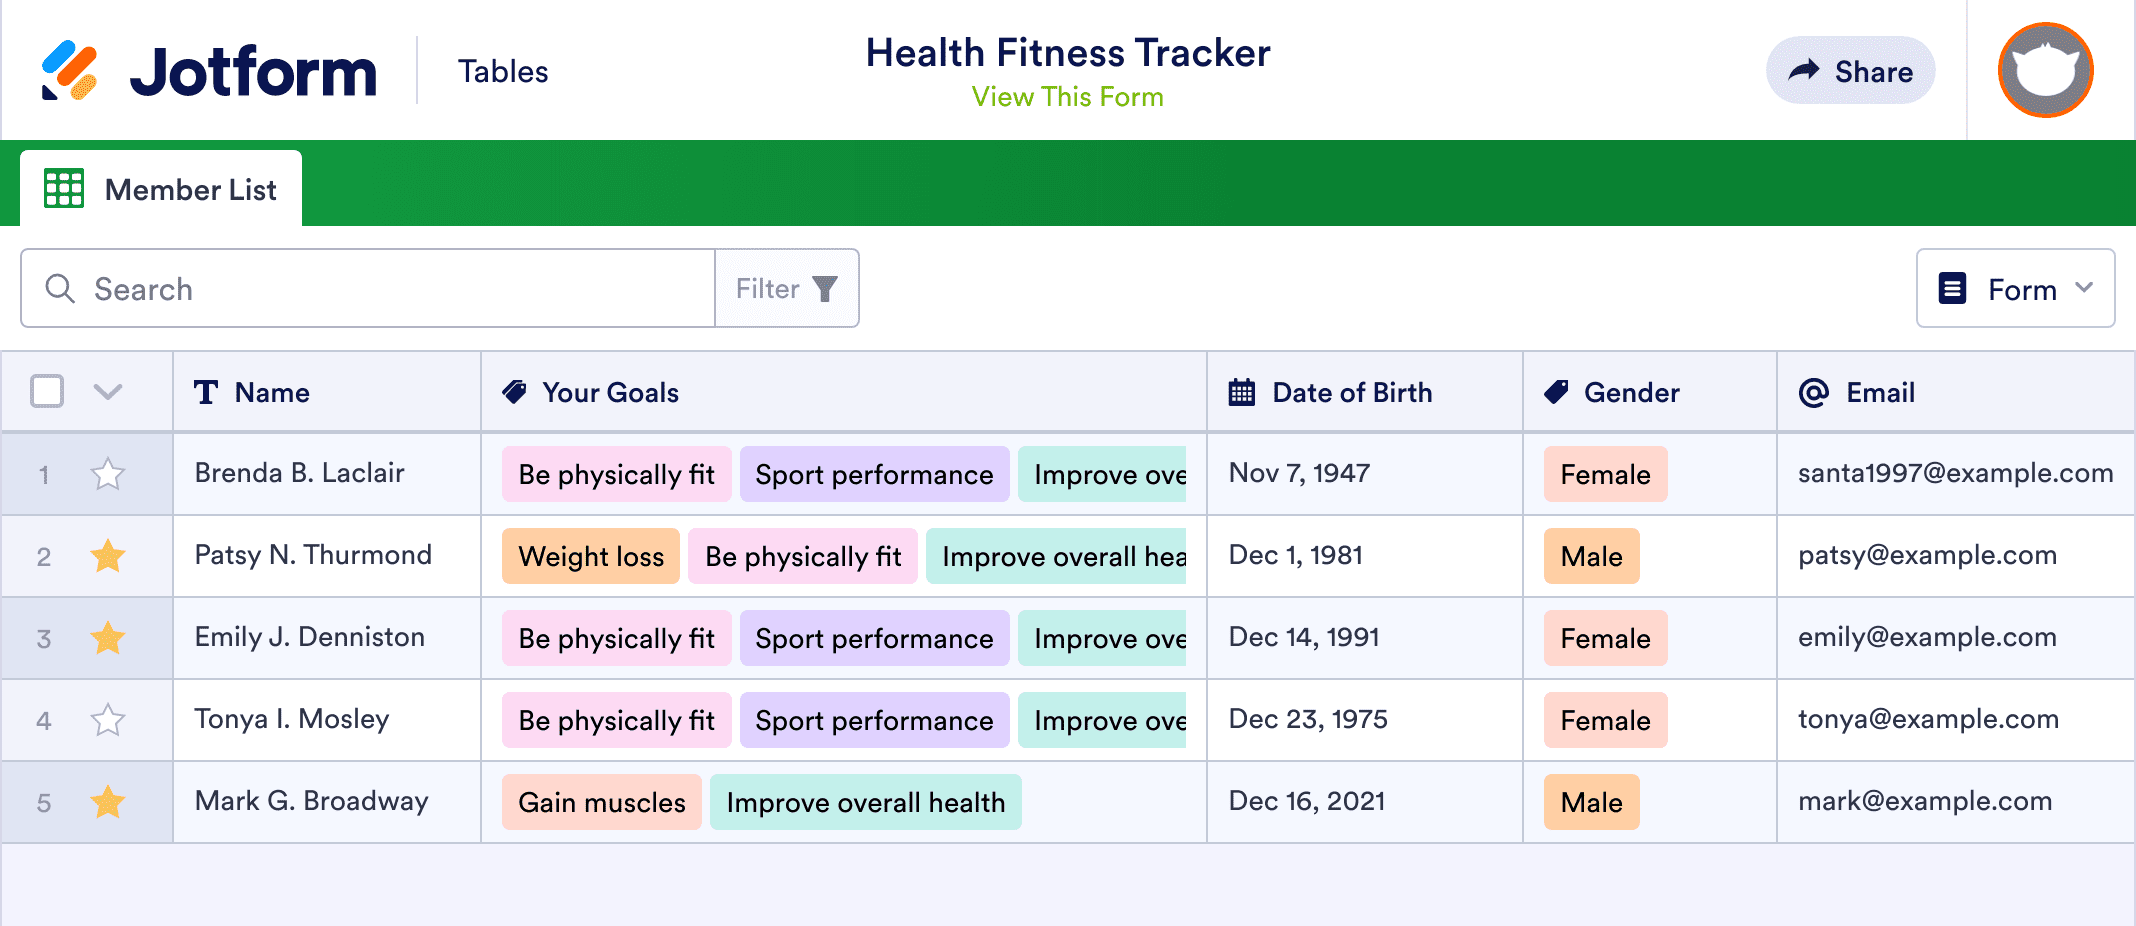 Health Fitness Tracker